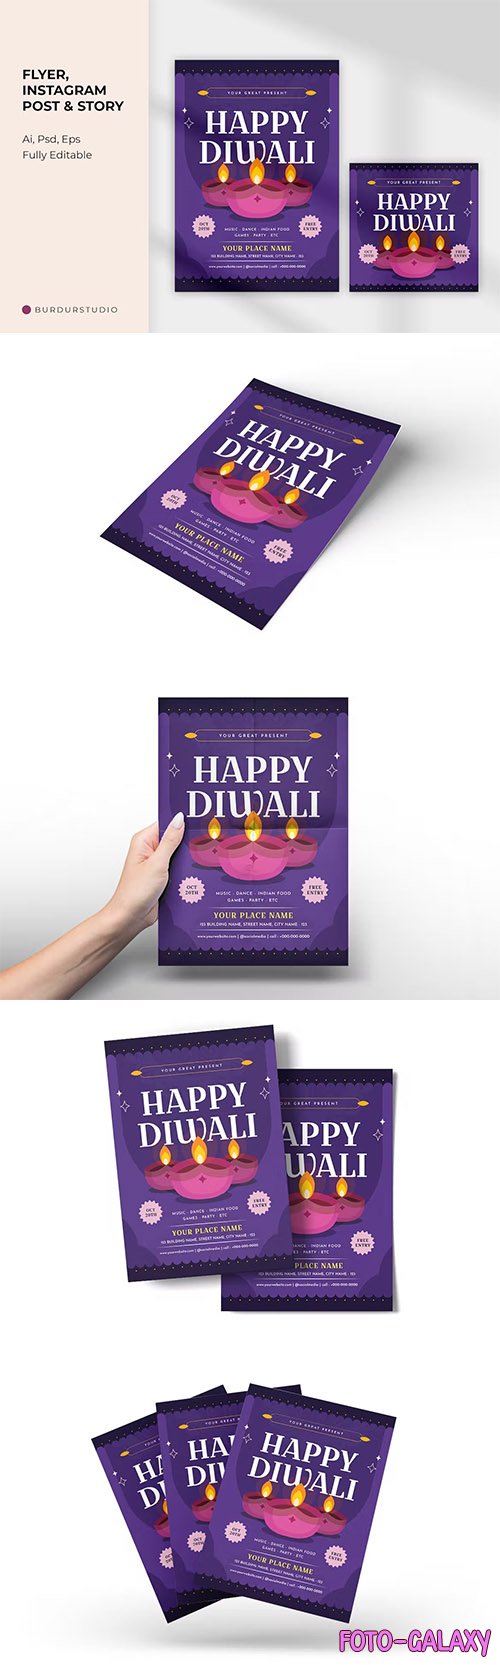 Happy Diwali Flyer and Instagram Post PSD